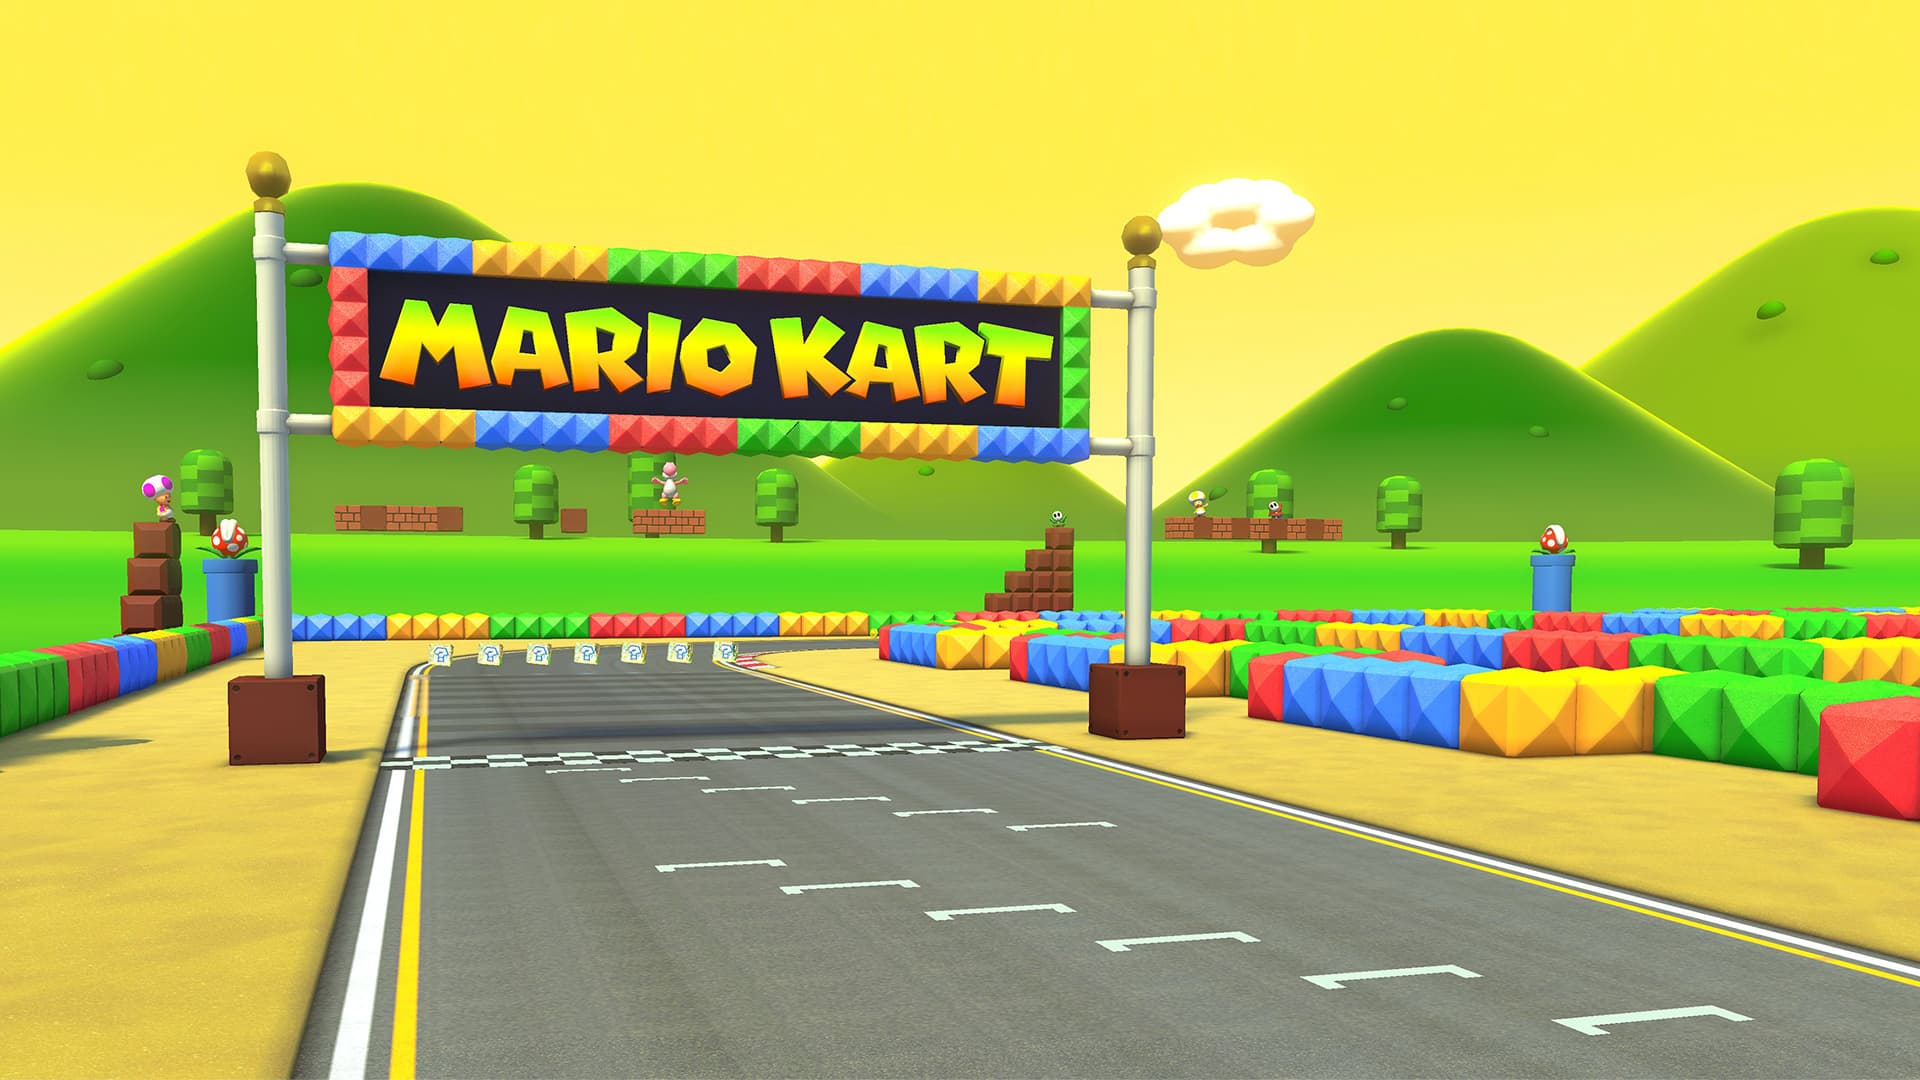 Mario Kart Tracks Quiz